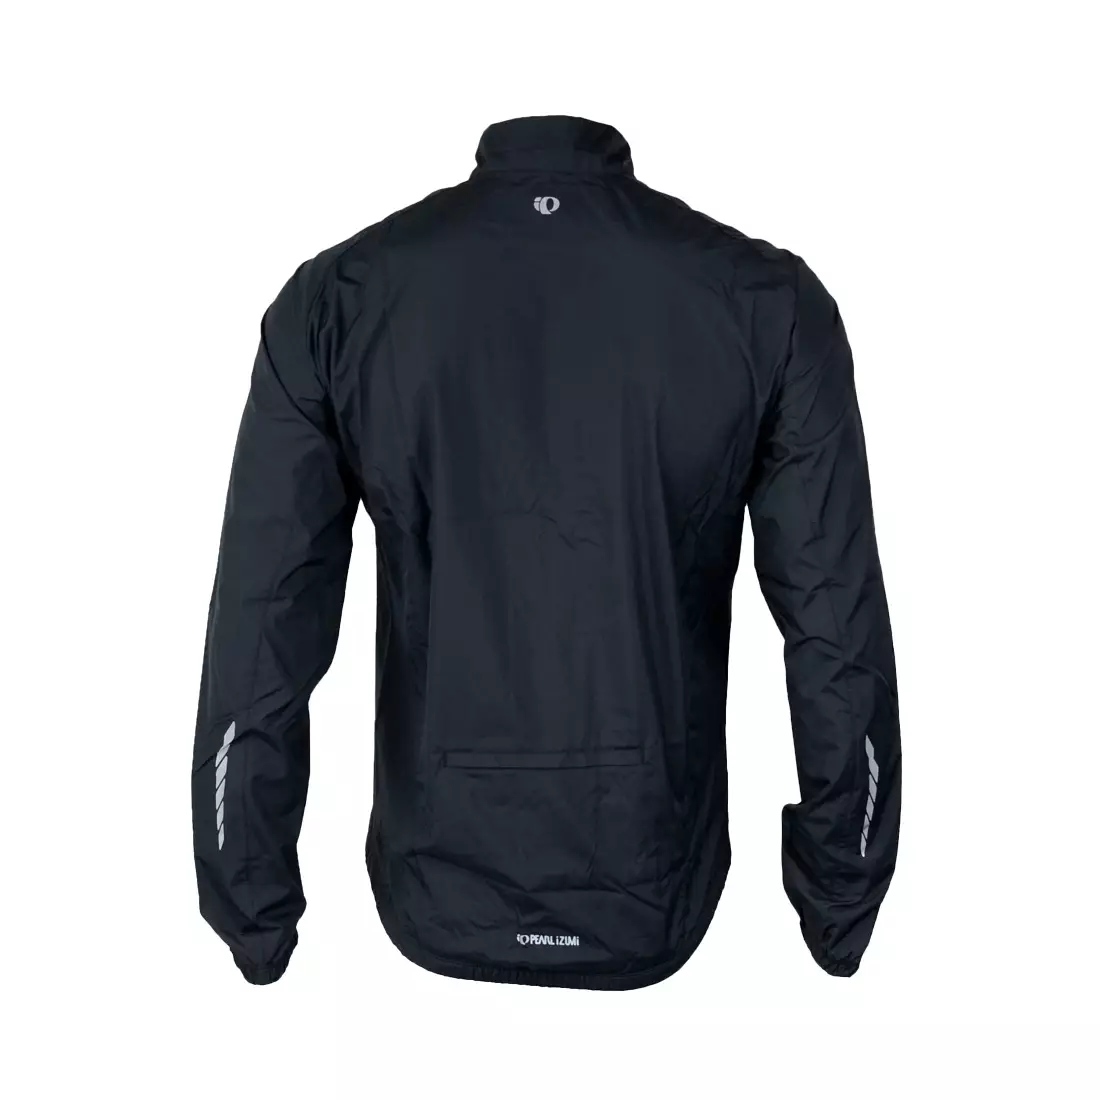 PEARL IZUMI - SELECT Barrier Jacket 11131335-021 - Herren-Radjacke - Farbe: Schwarz